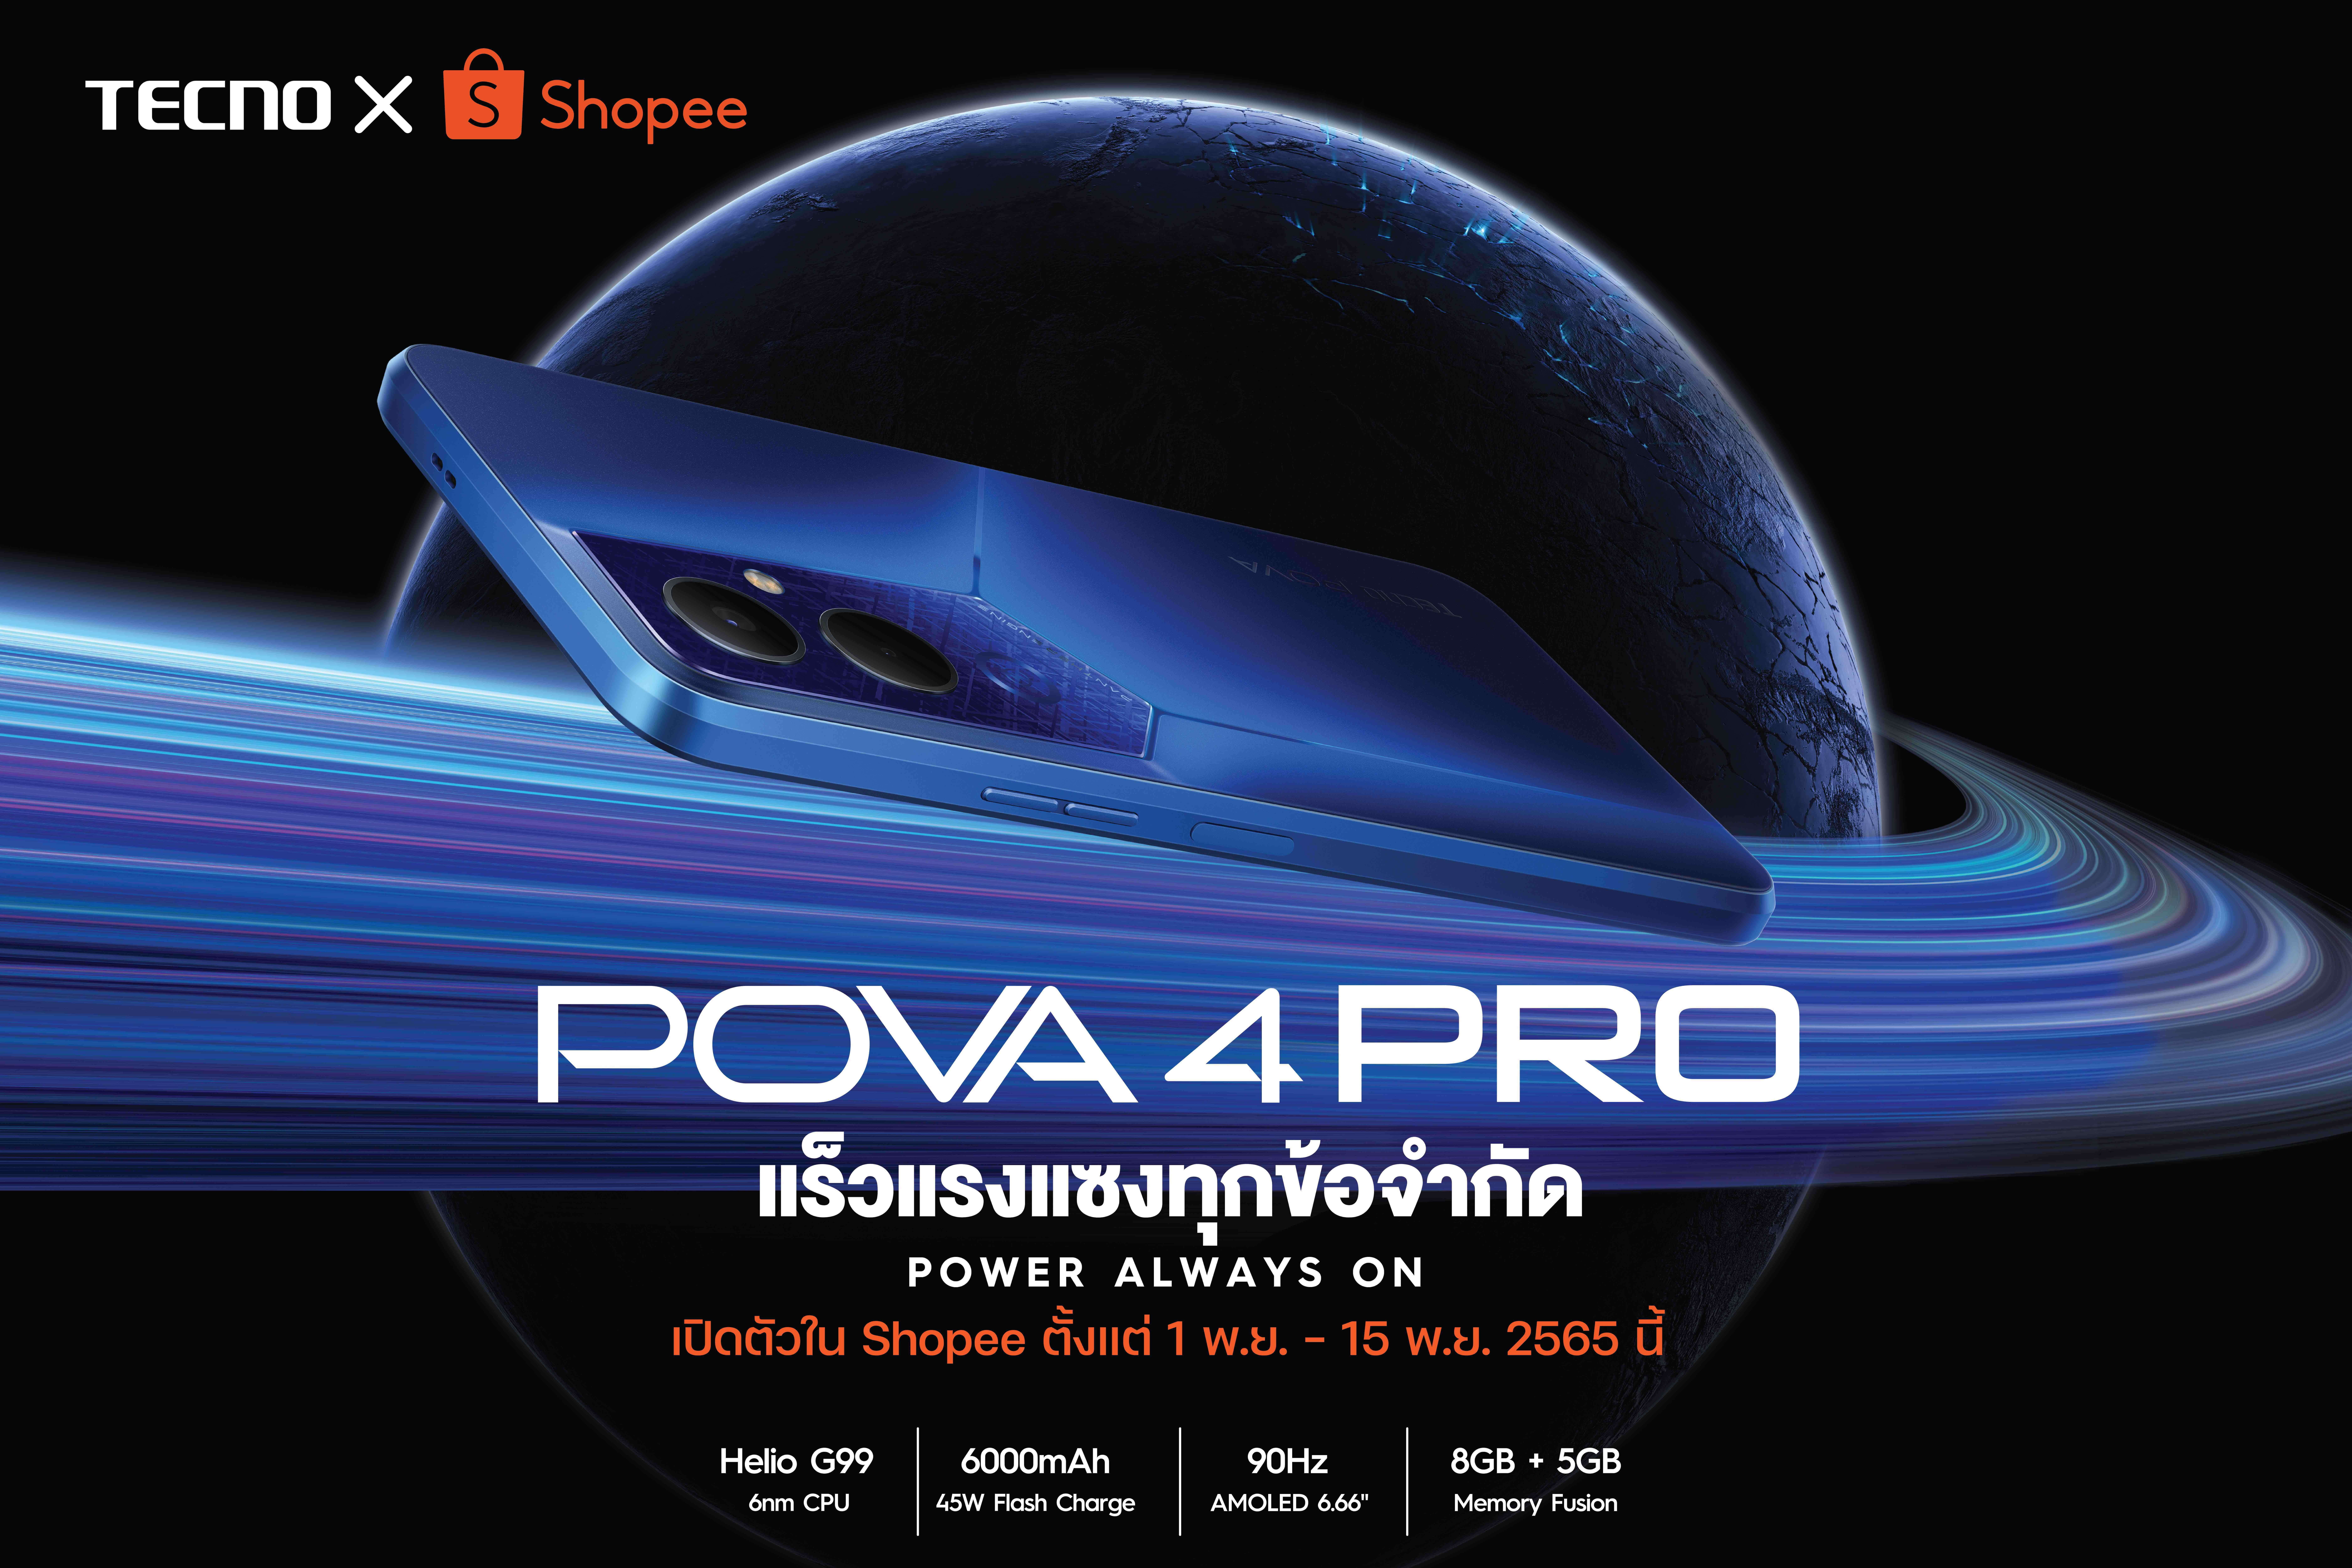 POVA 4 Pro สมาร์ทโฟนล่าสุดจาก TECNO ดีไซน์อัปเกรดทรงพลัง เพื่อประสิทธิภาพและประสบการณ์การเล่นเกมที่เหนือกว่า เร็วแรงแซงทุกข้อจำกัด